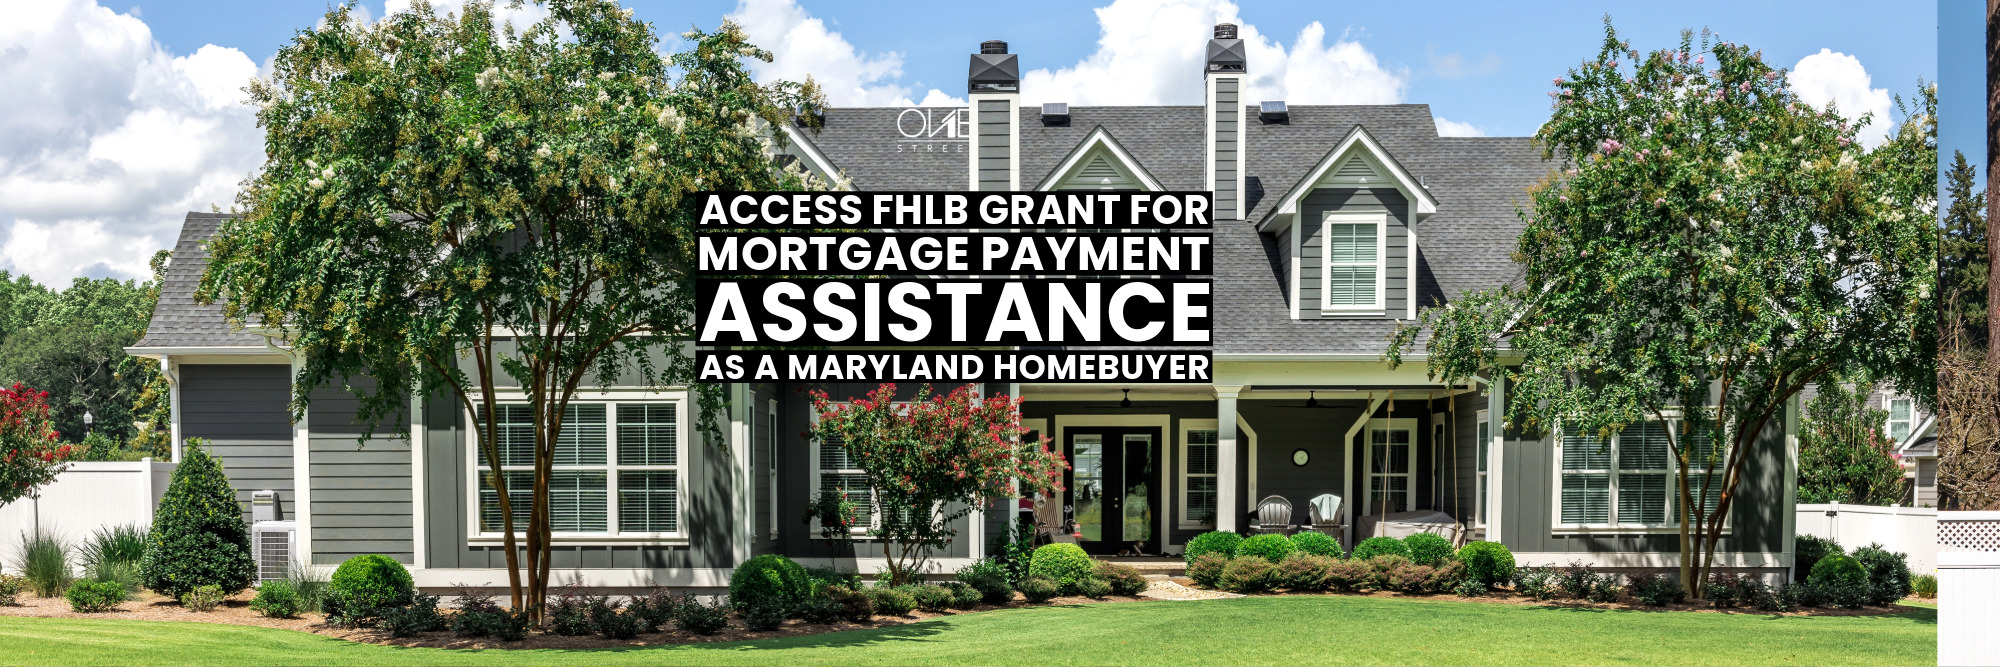 FHLB Grand Maryland Homebuyers